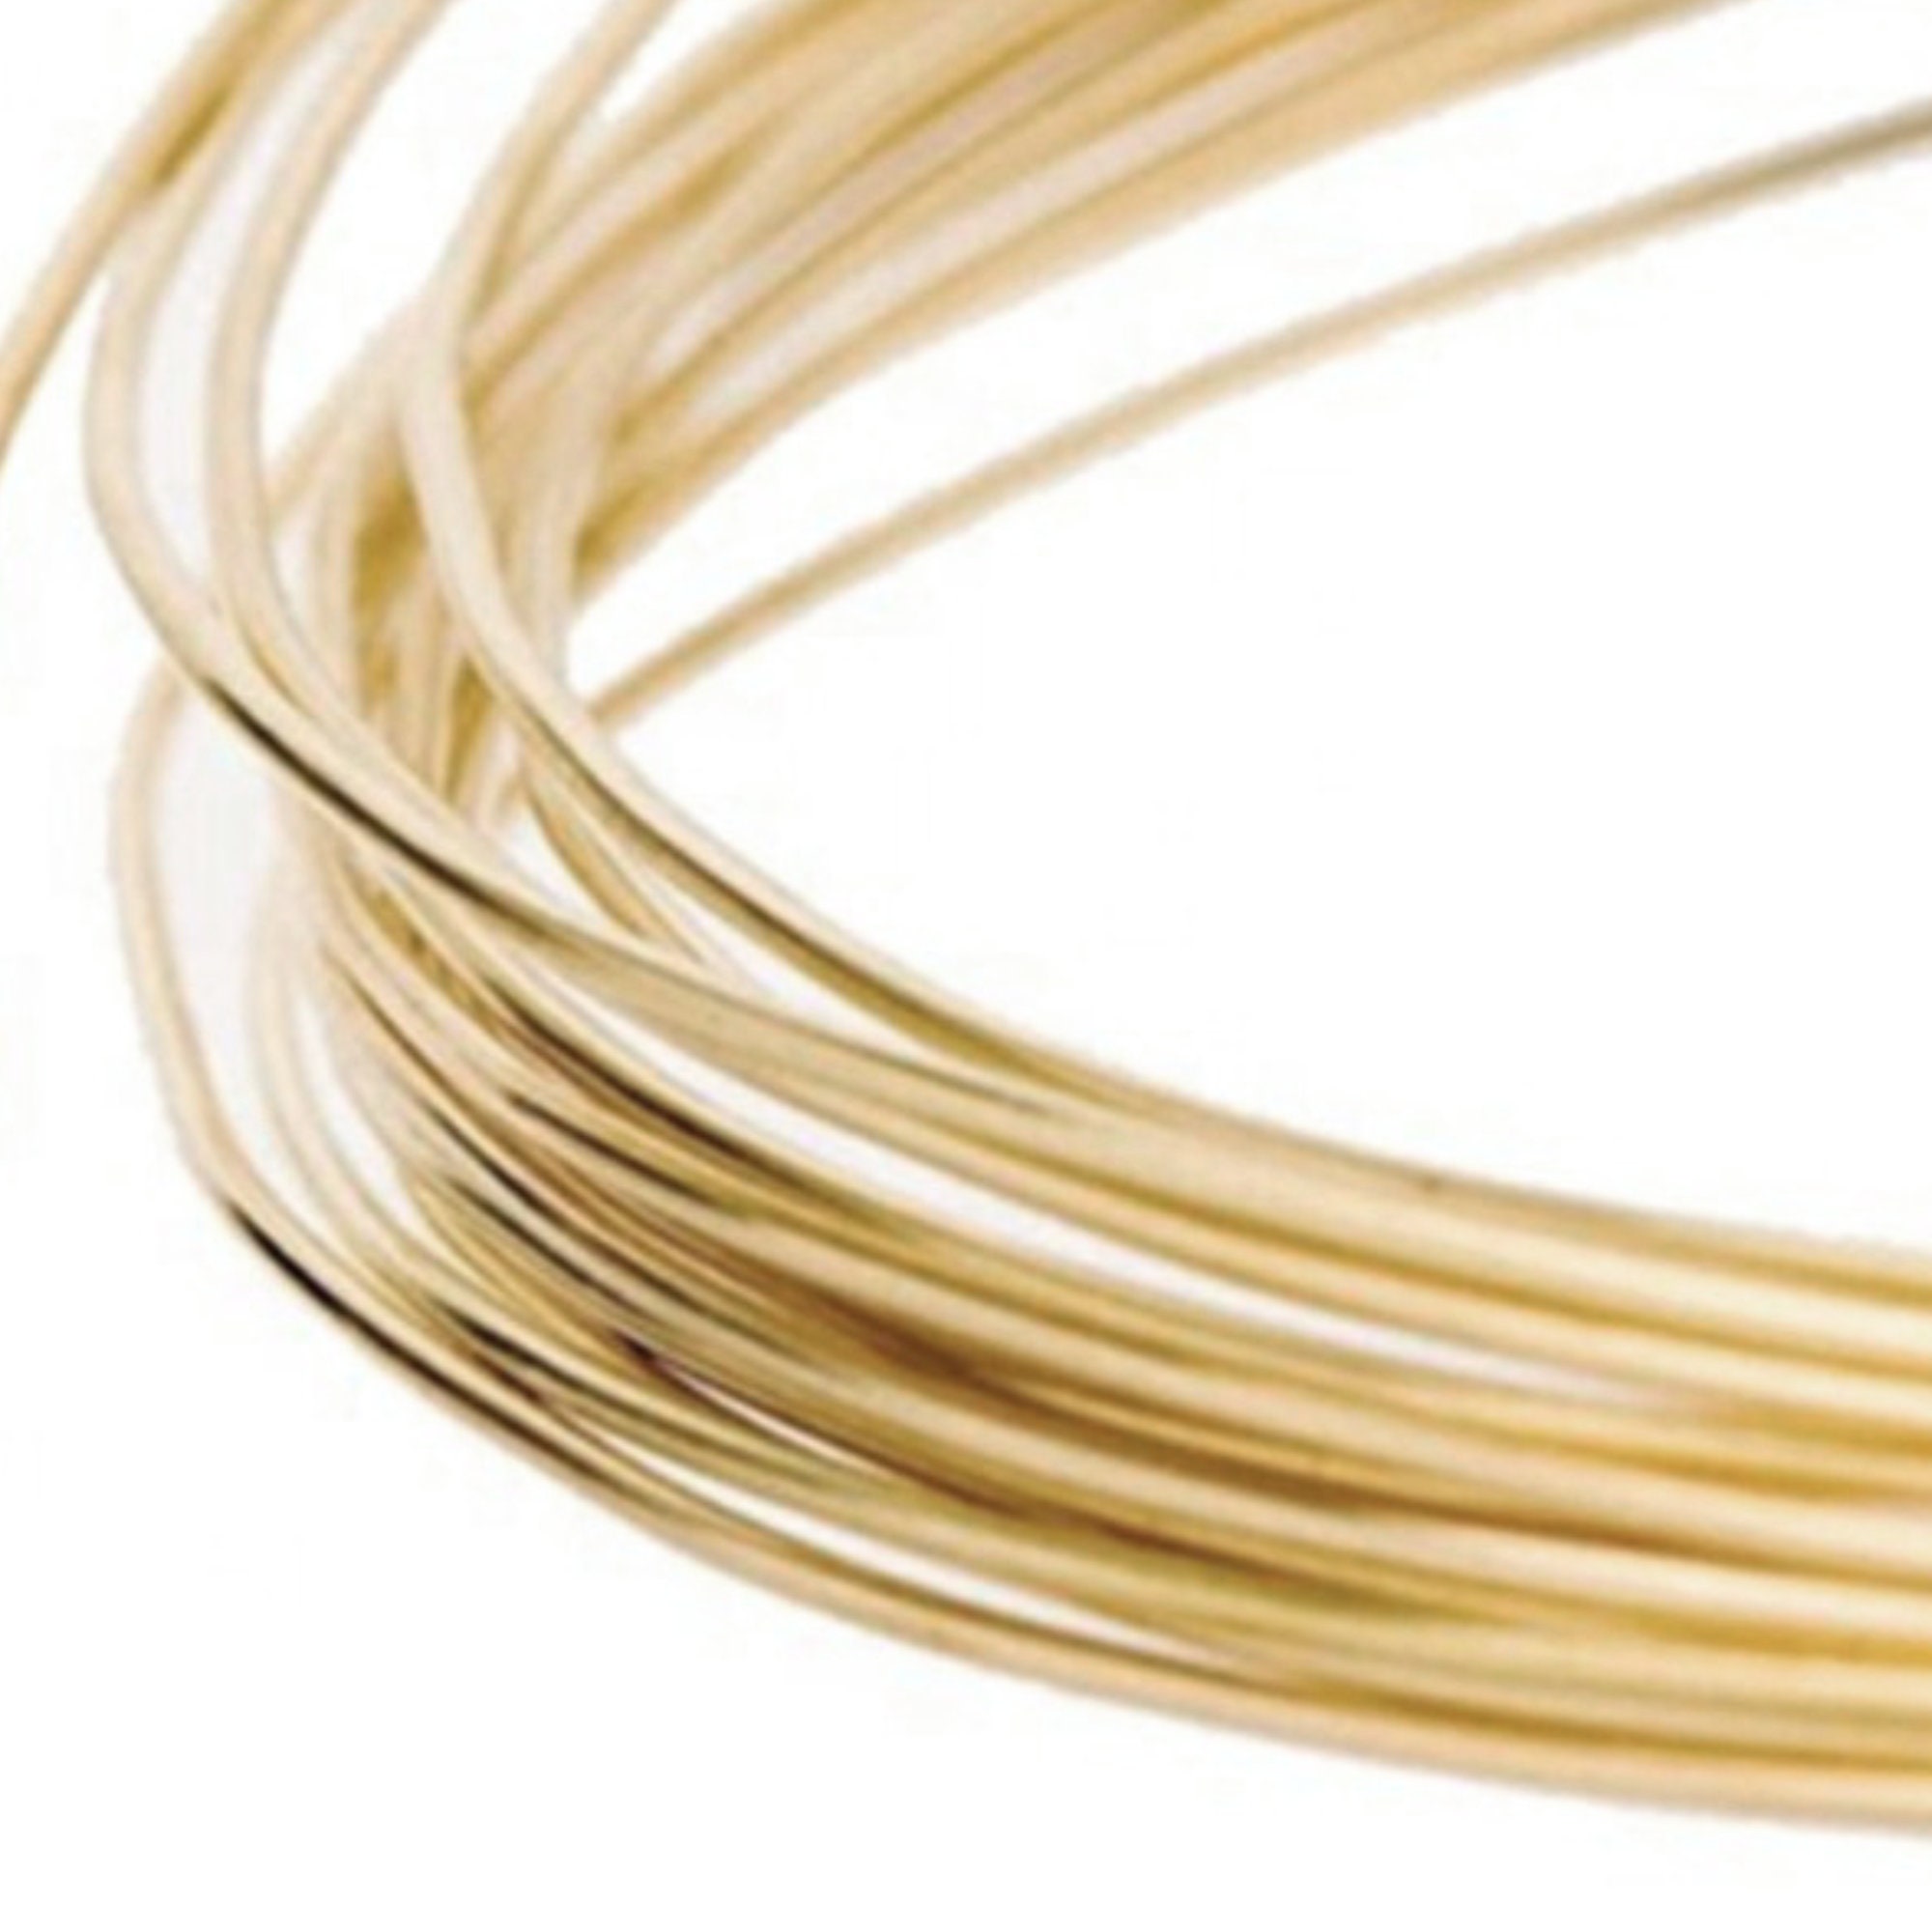 22ga SUPER EZ Plumb 14k Yellow Gold Wire Solder - Santa Fe Jewelers Supply  : Santa Fe Jewelers Supply